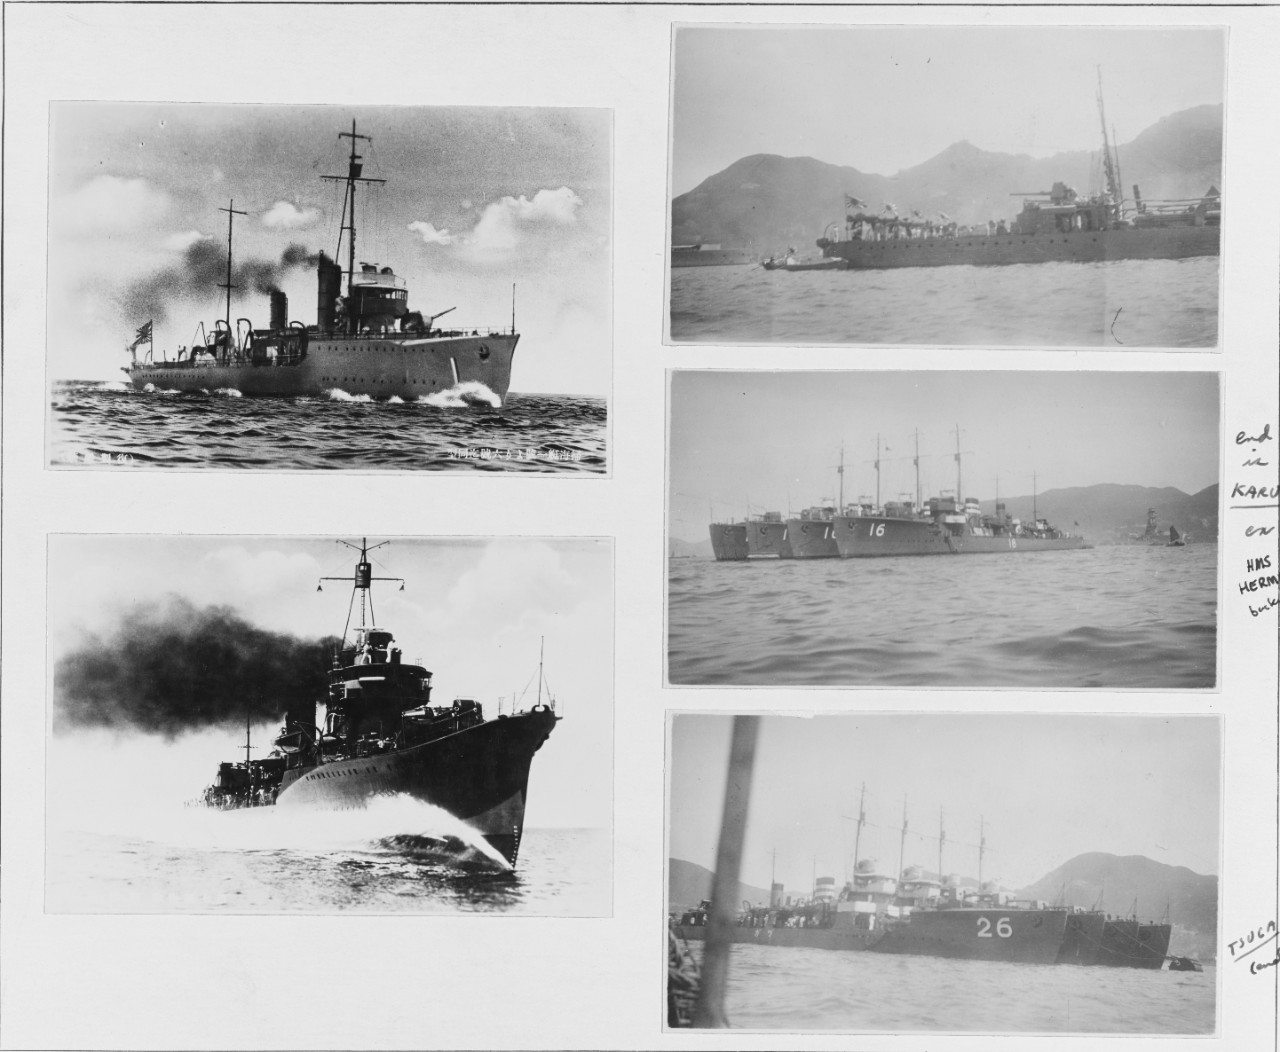 Japanese Destroyers: KARUKAYA (No. 18), HMS HERMES in background, TSUGA (No. 26)